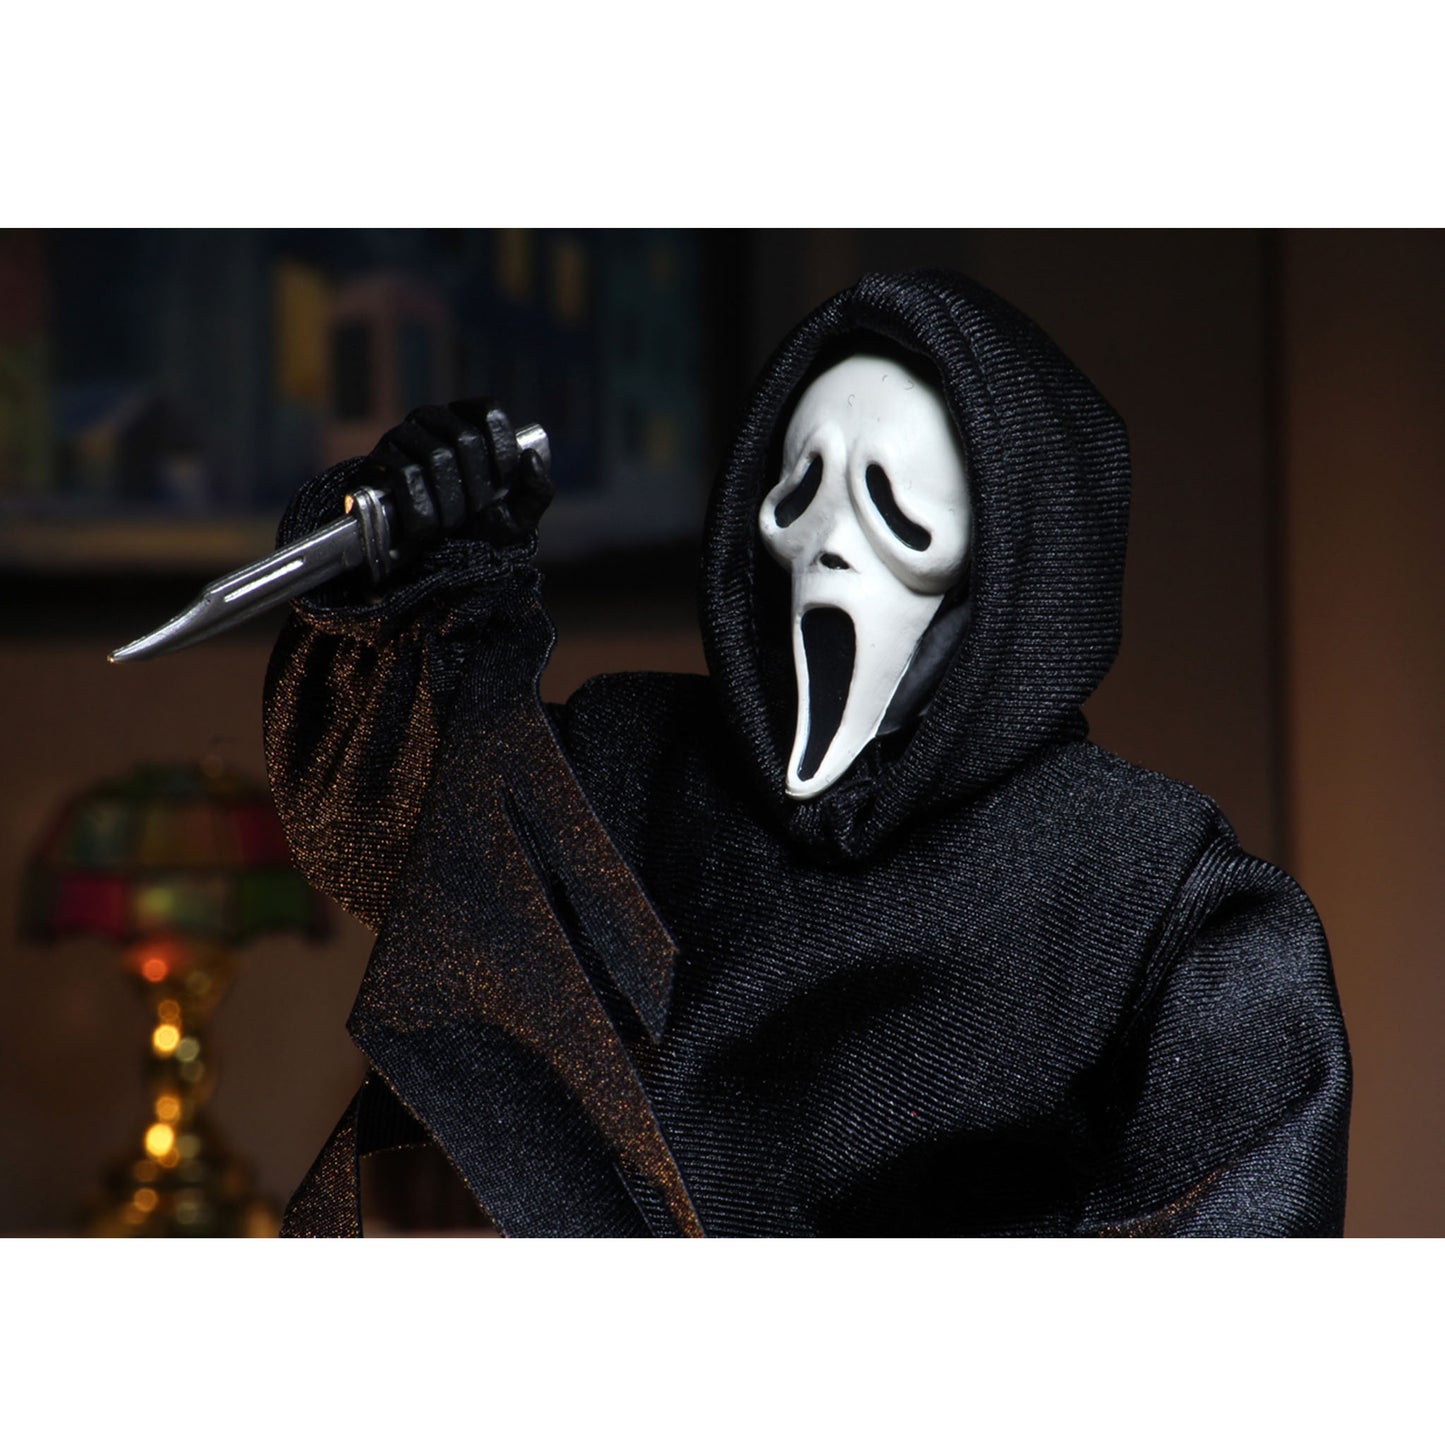 Ghostface (Scream) NECA Clothed Action Figure